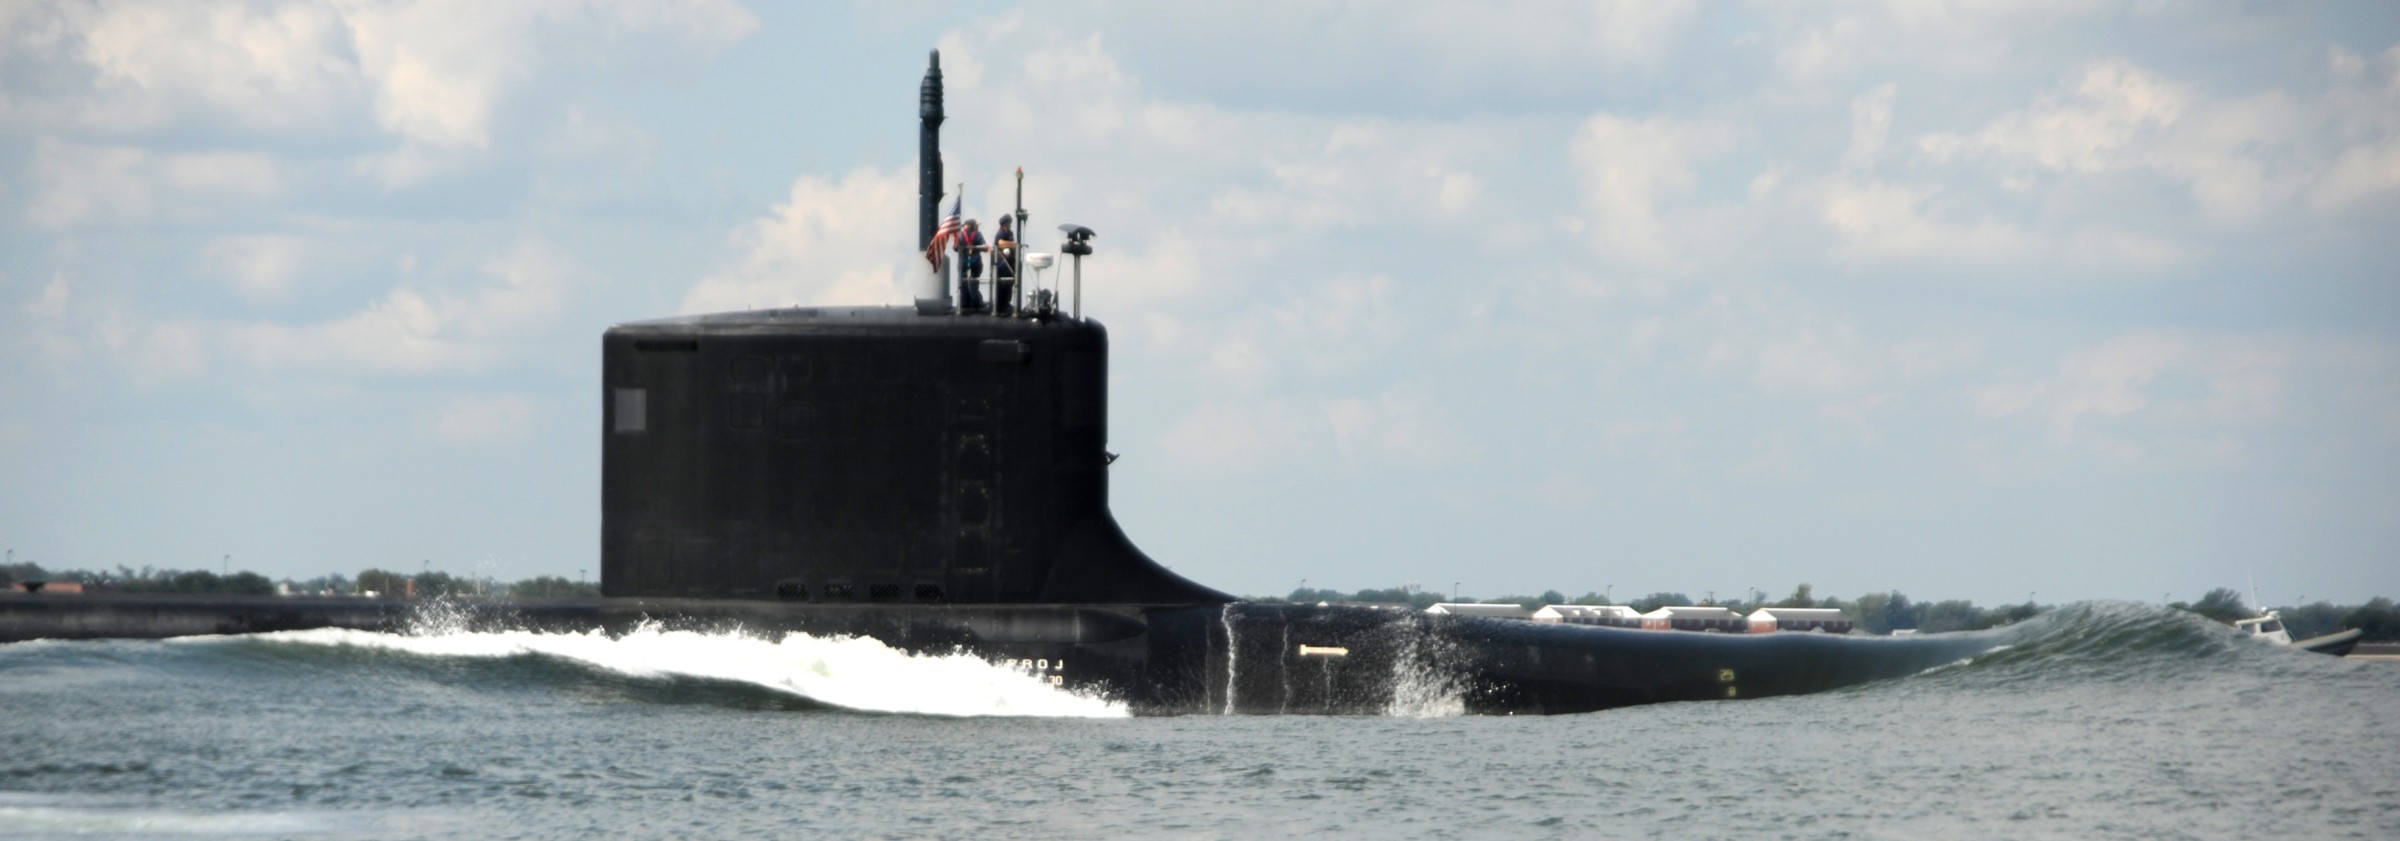 ssn-781 uss california virginia class attack submarine us navy 18